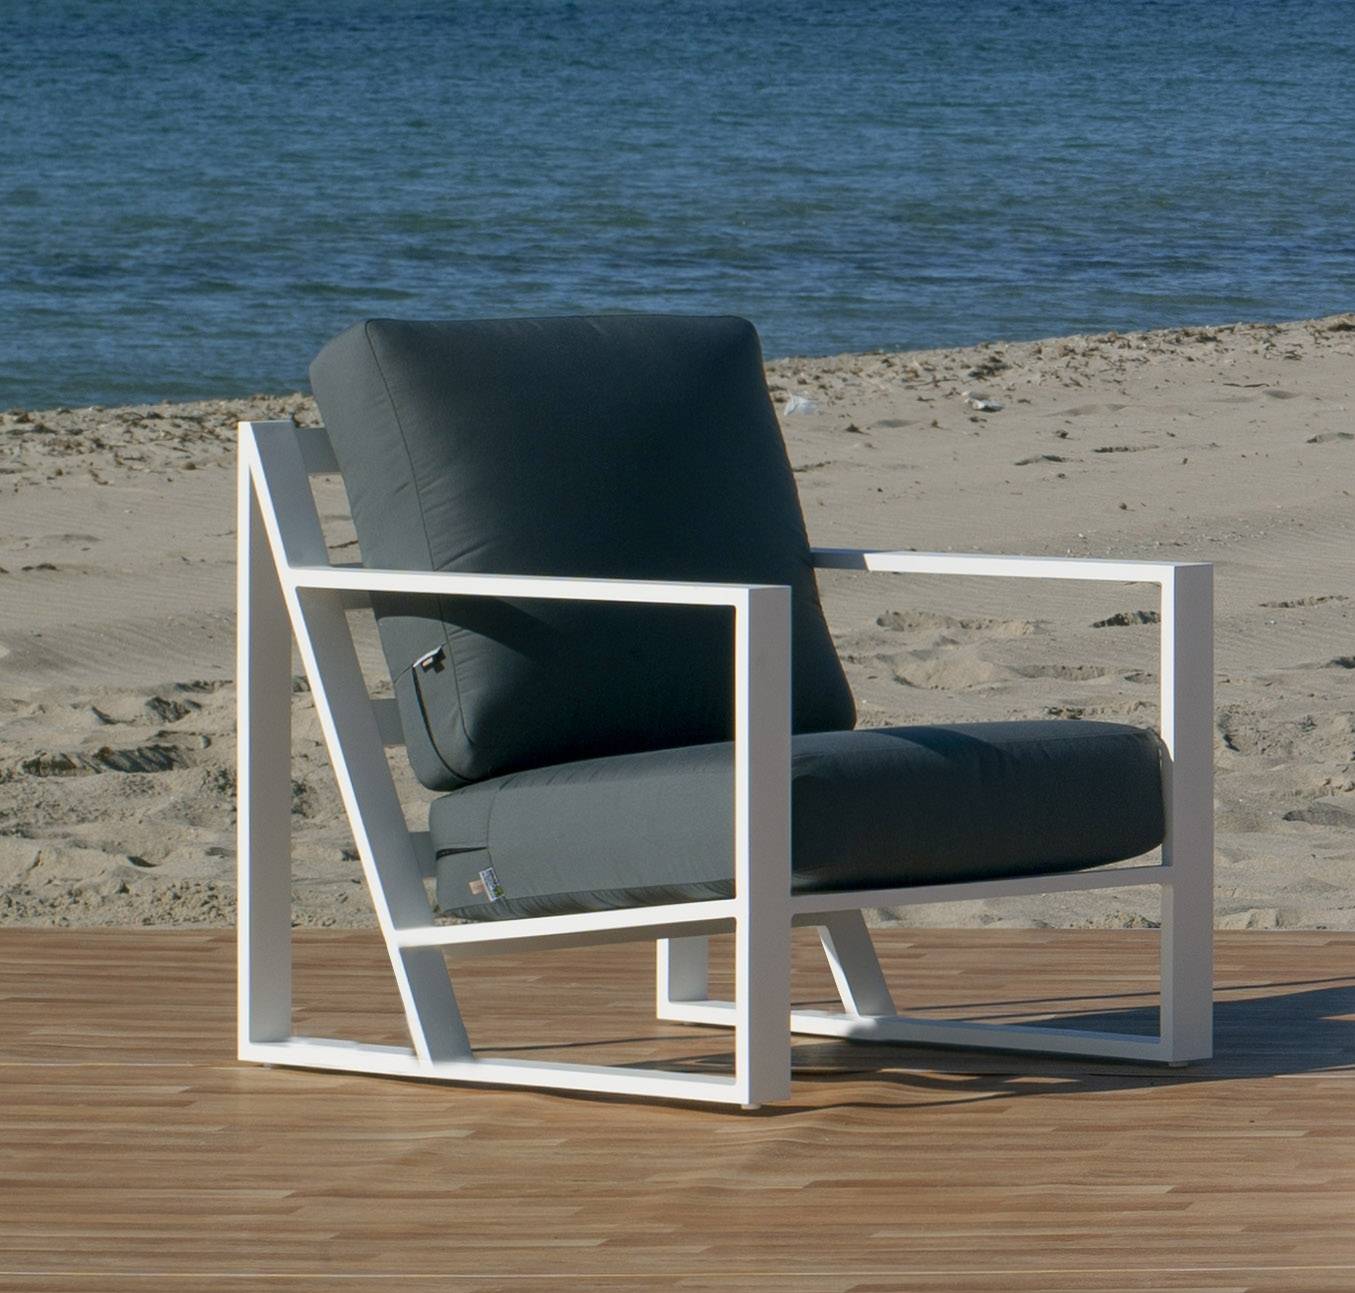 Set Aluminio Luxe Aleli-10 - Lujoso conjunto de aluminio: 1 sofá de 3 plazas + 2 sillones + 2 reposapiés + 1 mesa de centro + cojines.